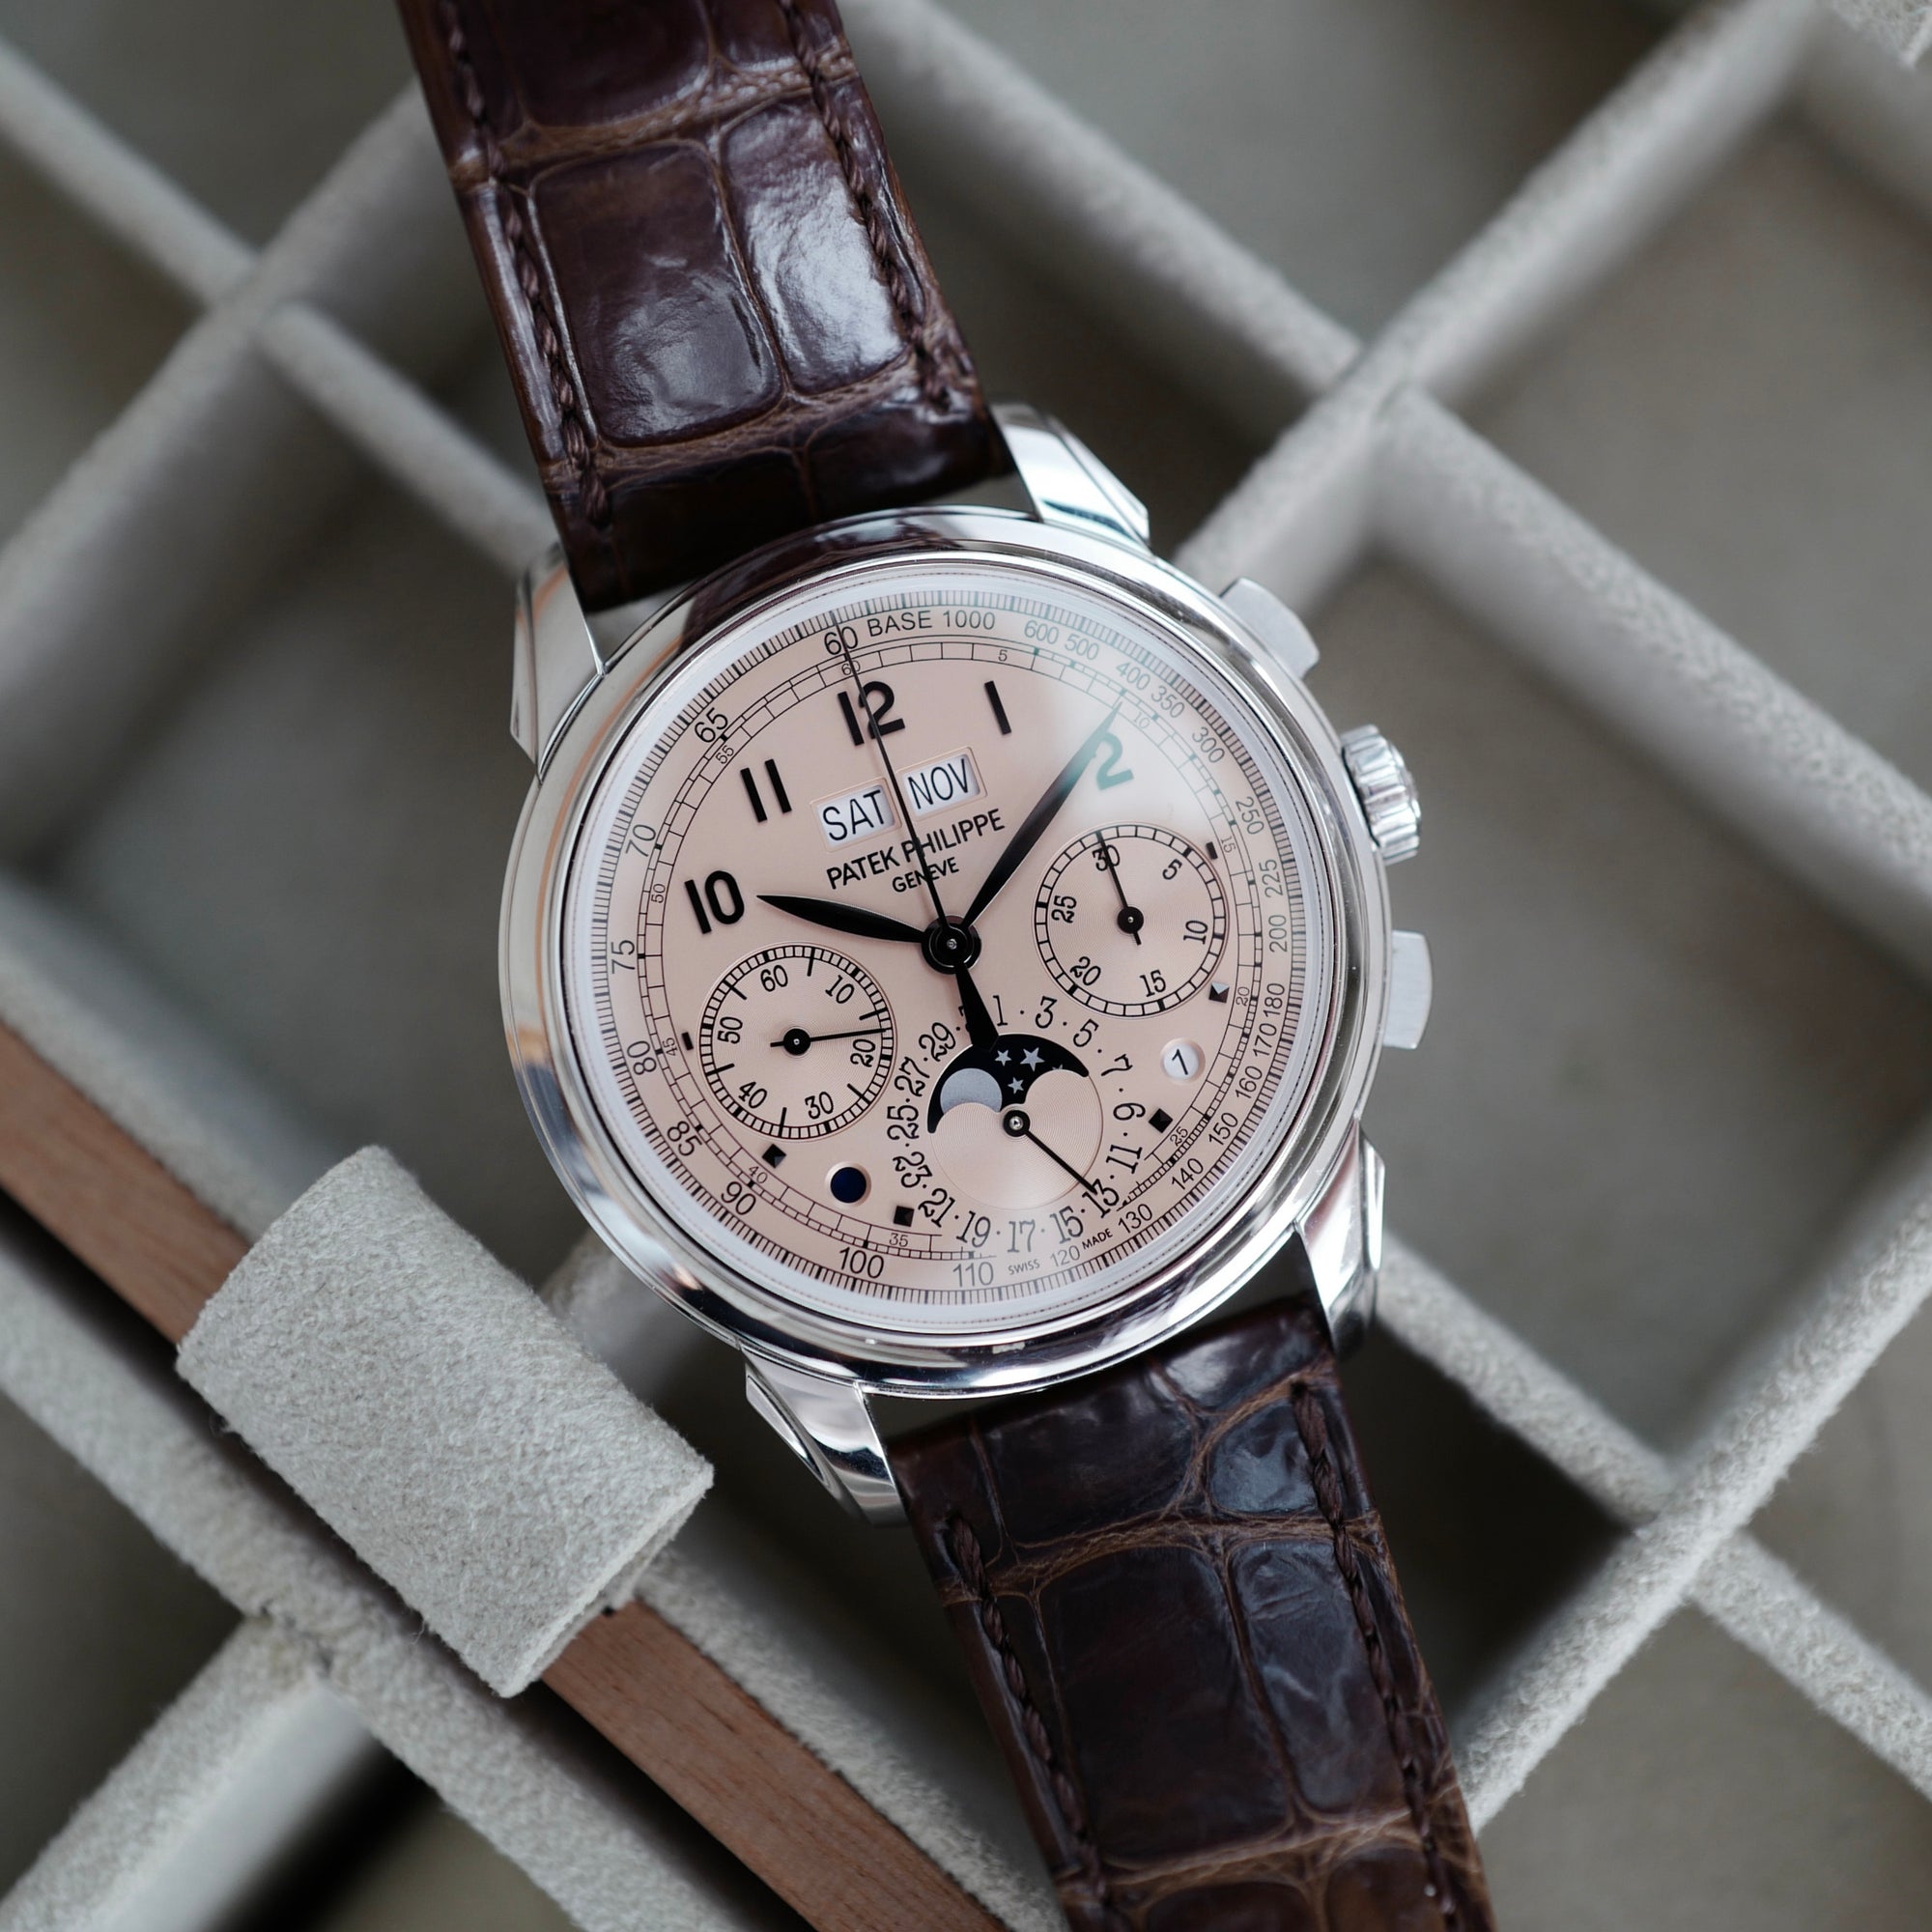 Patek Philippe - Patek Philippe Platinum Perpetual Calendar Chronograph, Ref. 5270P - The Keystone Watches